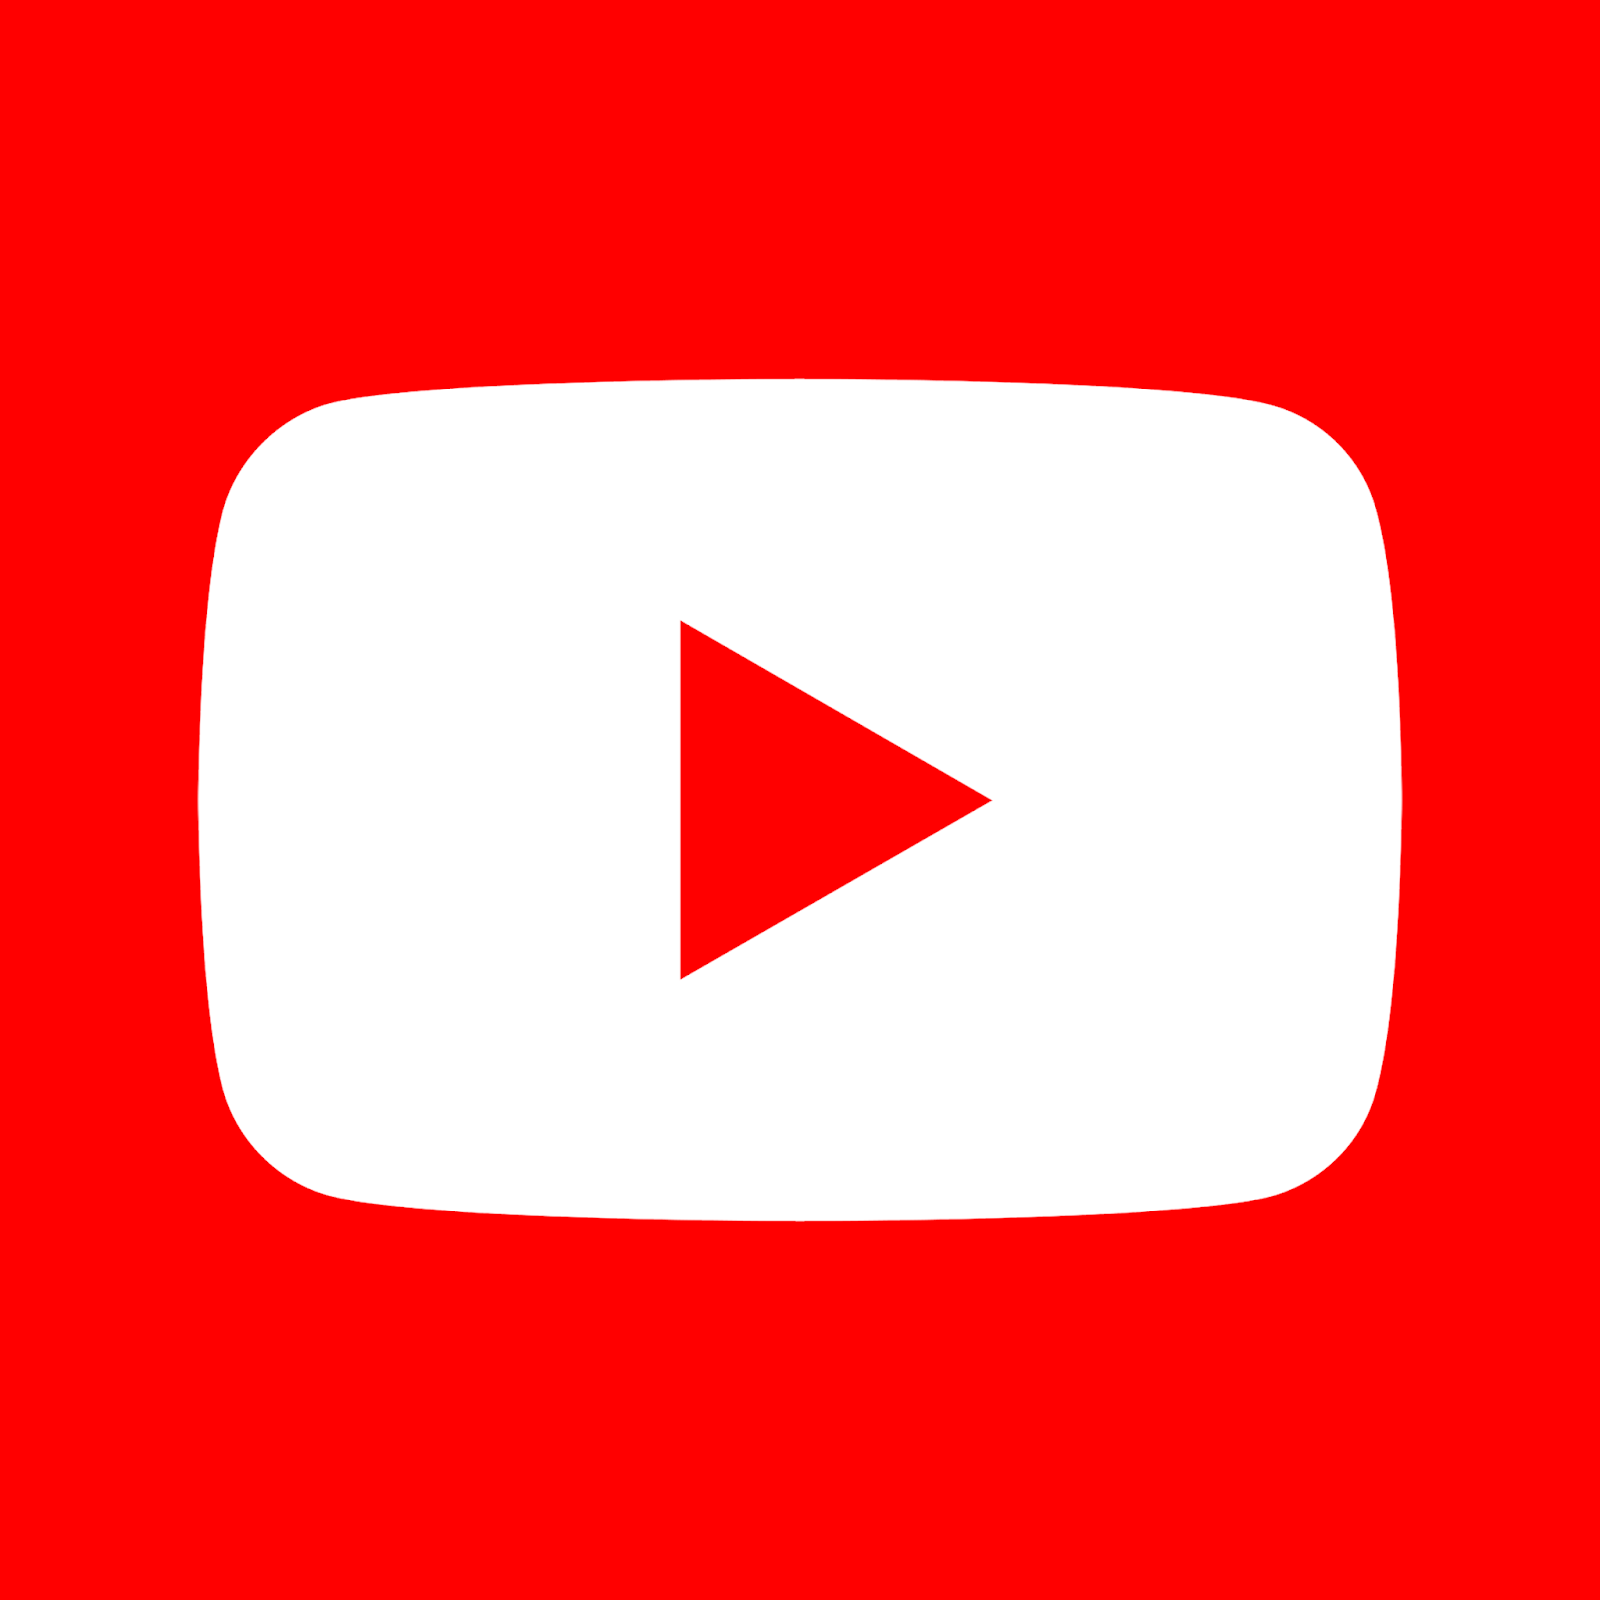 Youtube logga